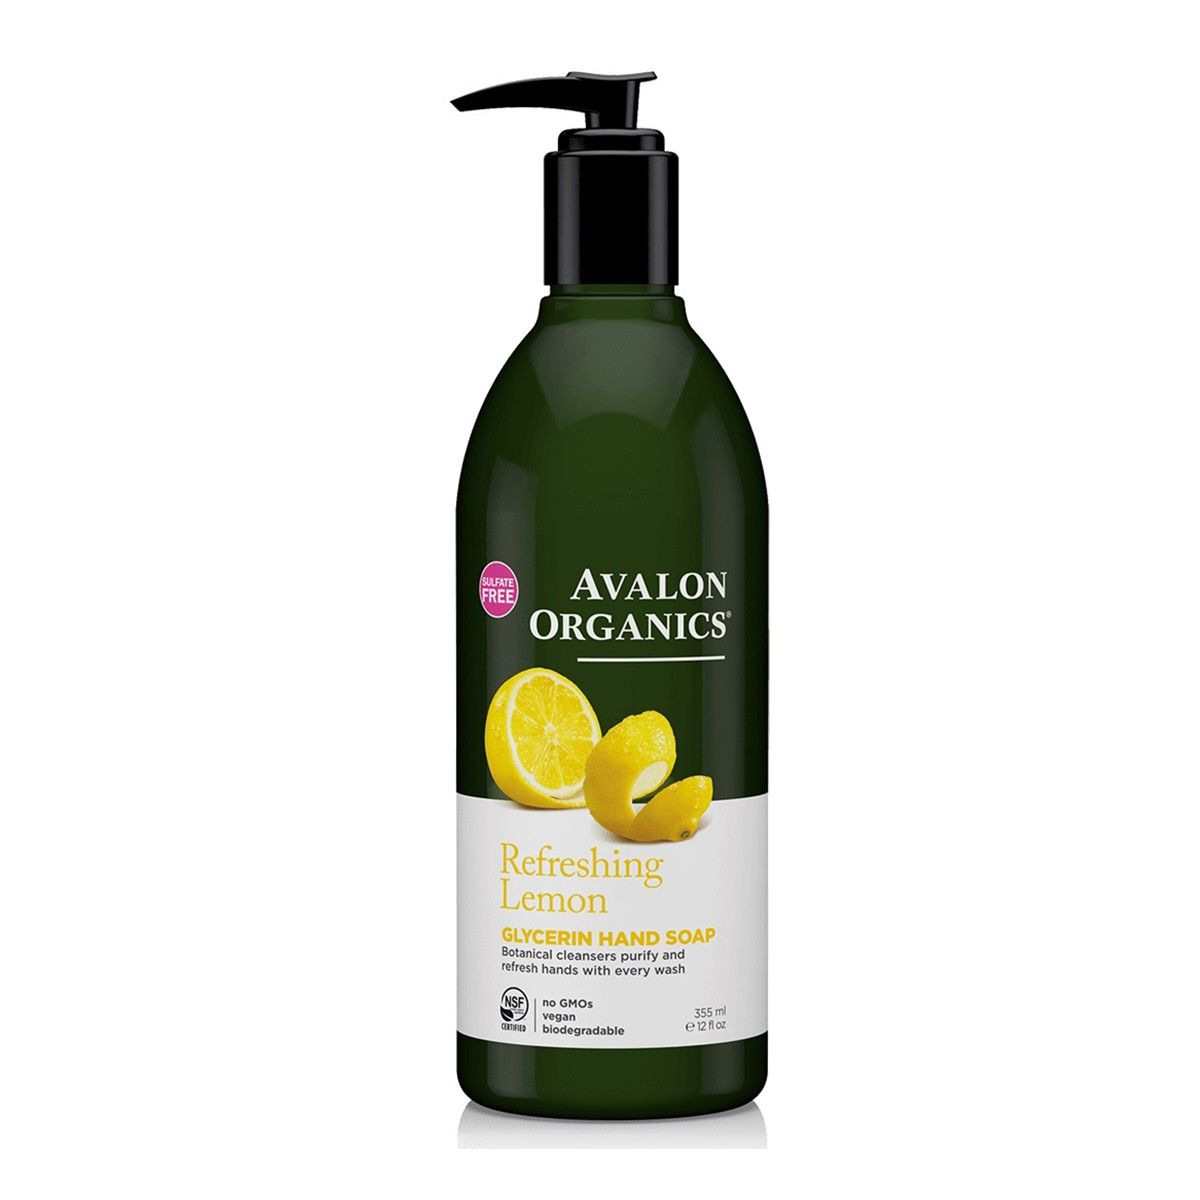 Avalon Organics Glycerin Hand Soap Lemon 355ml